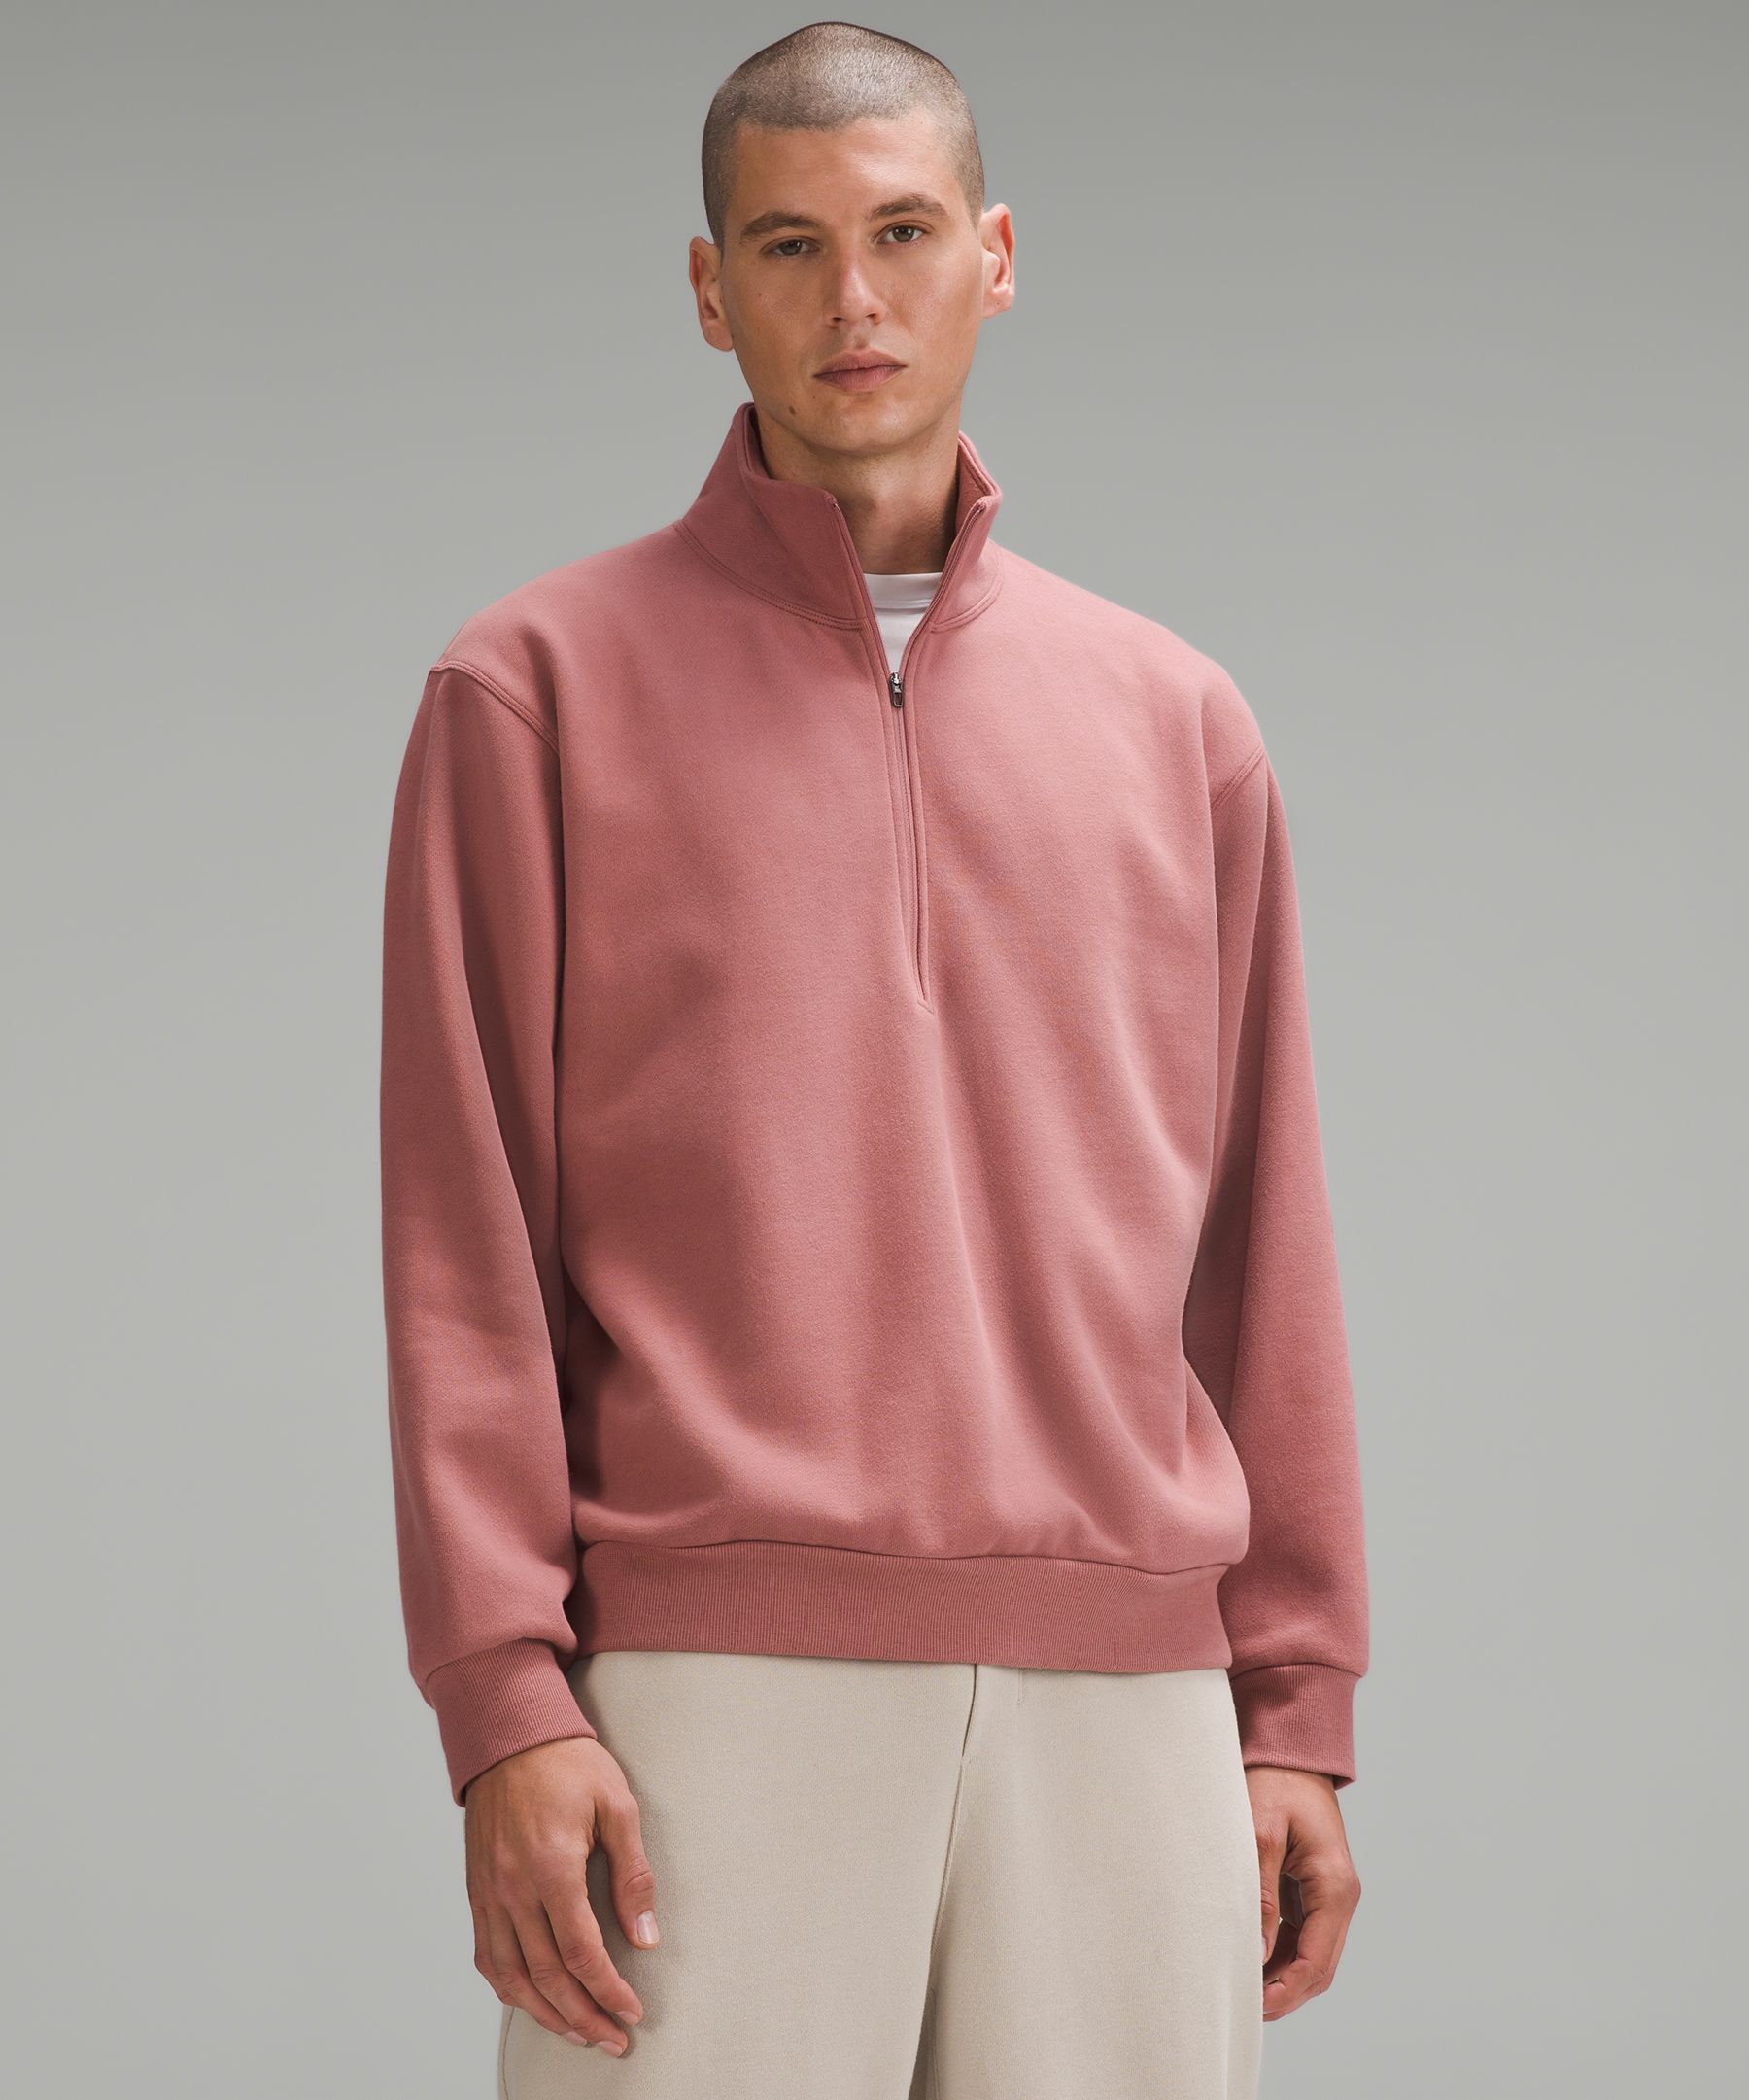 Lululemon Steady State Half Zip Sweatshirt Heathered Light Grey Size S